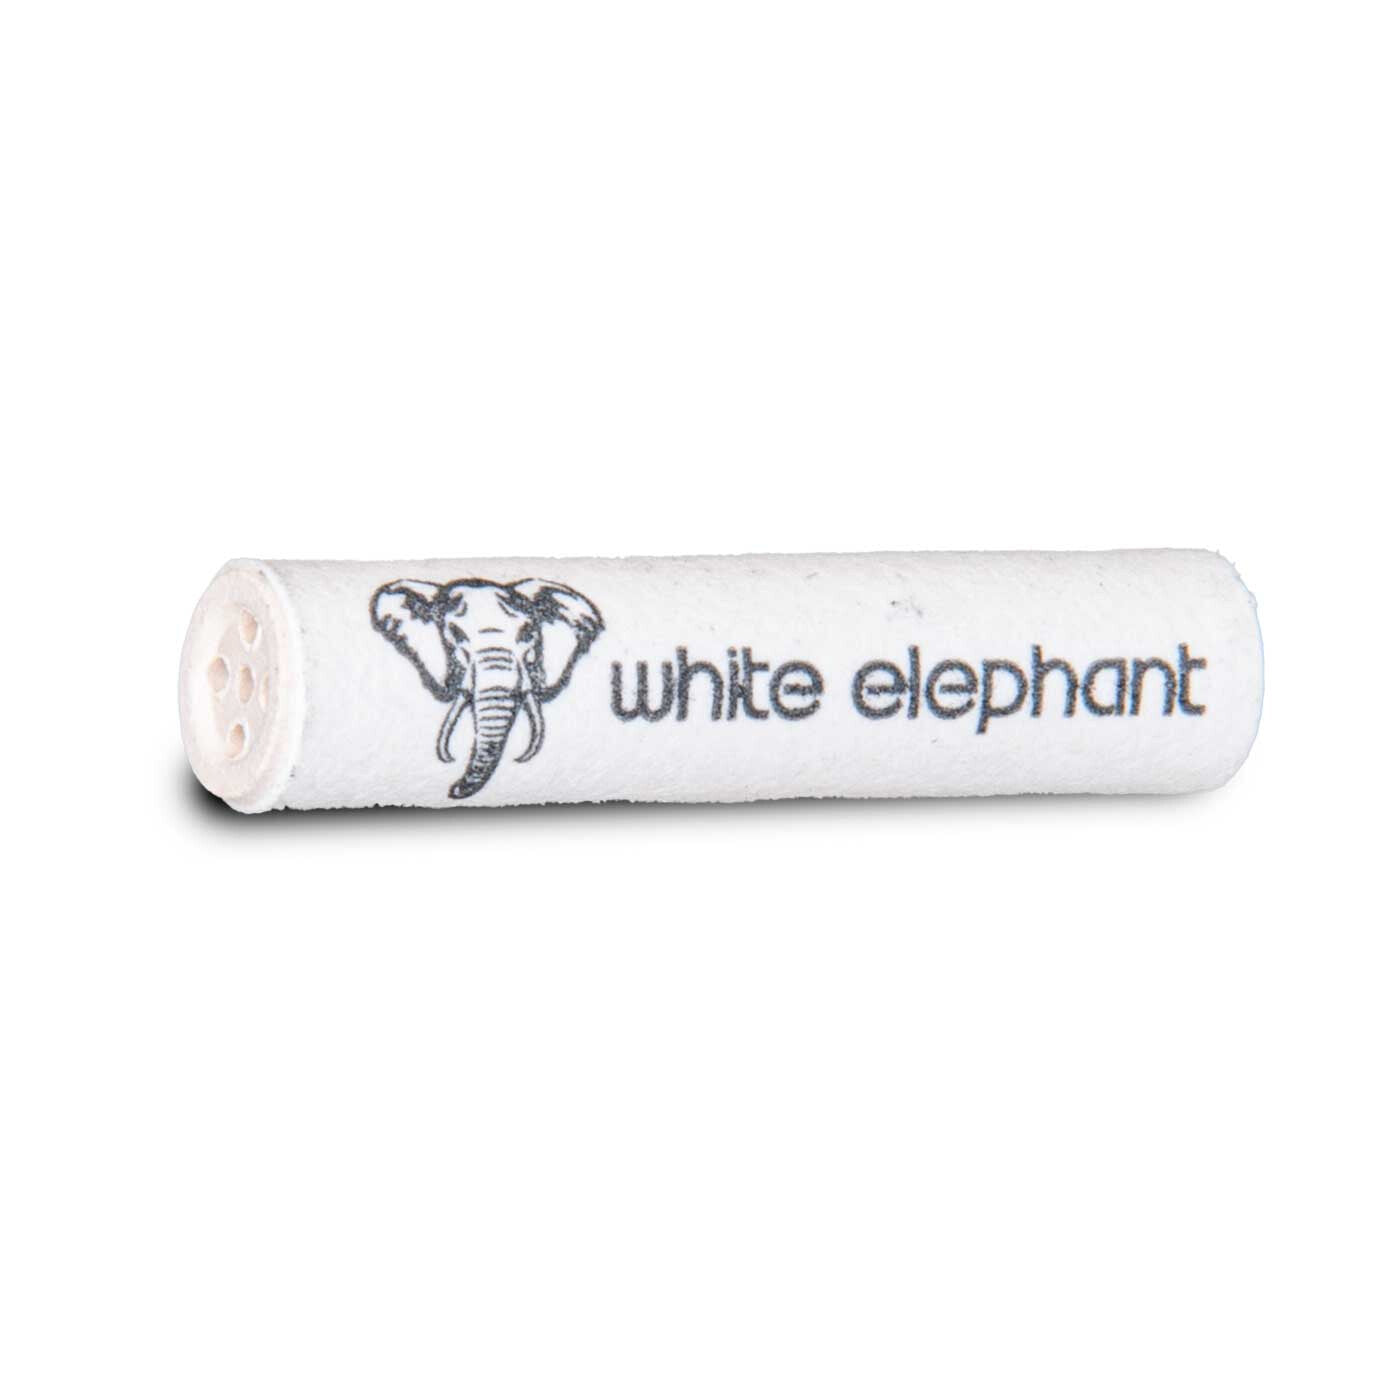 Display White Elephant Charcoal Filter 35 mm 1 x 150 Pcs